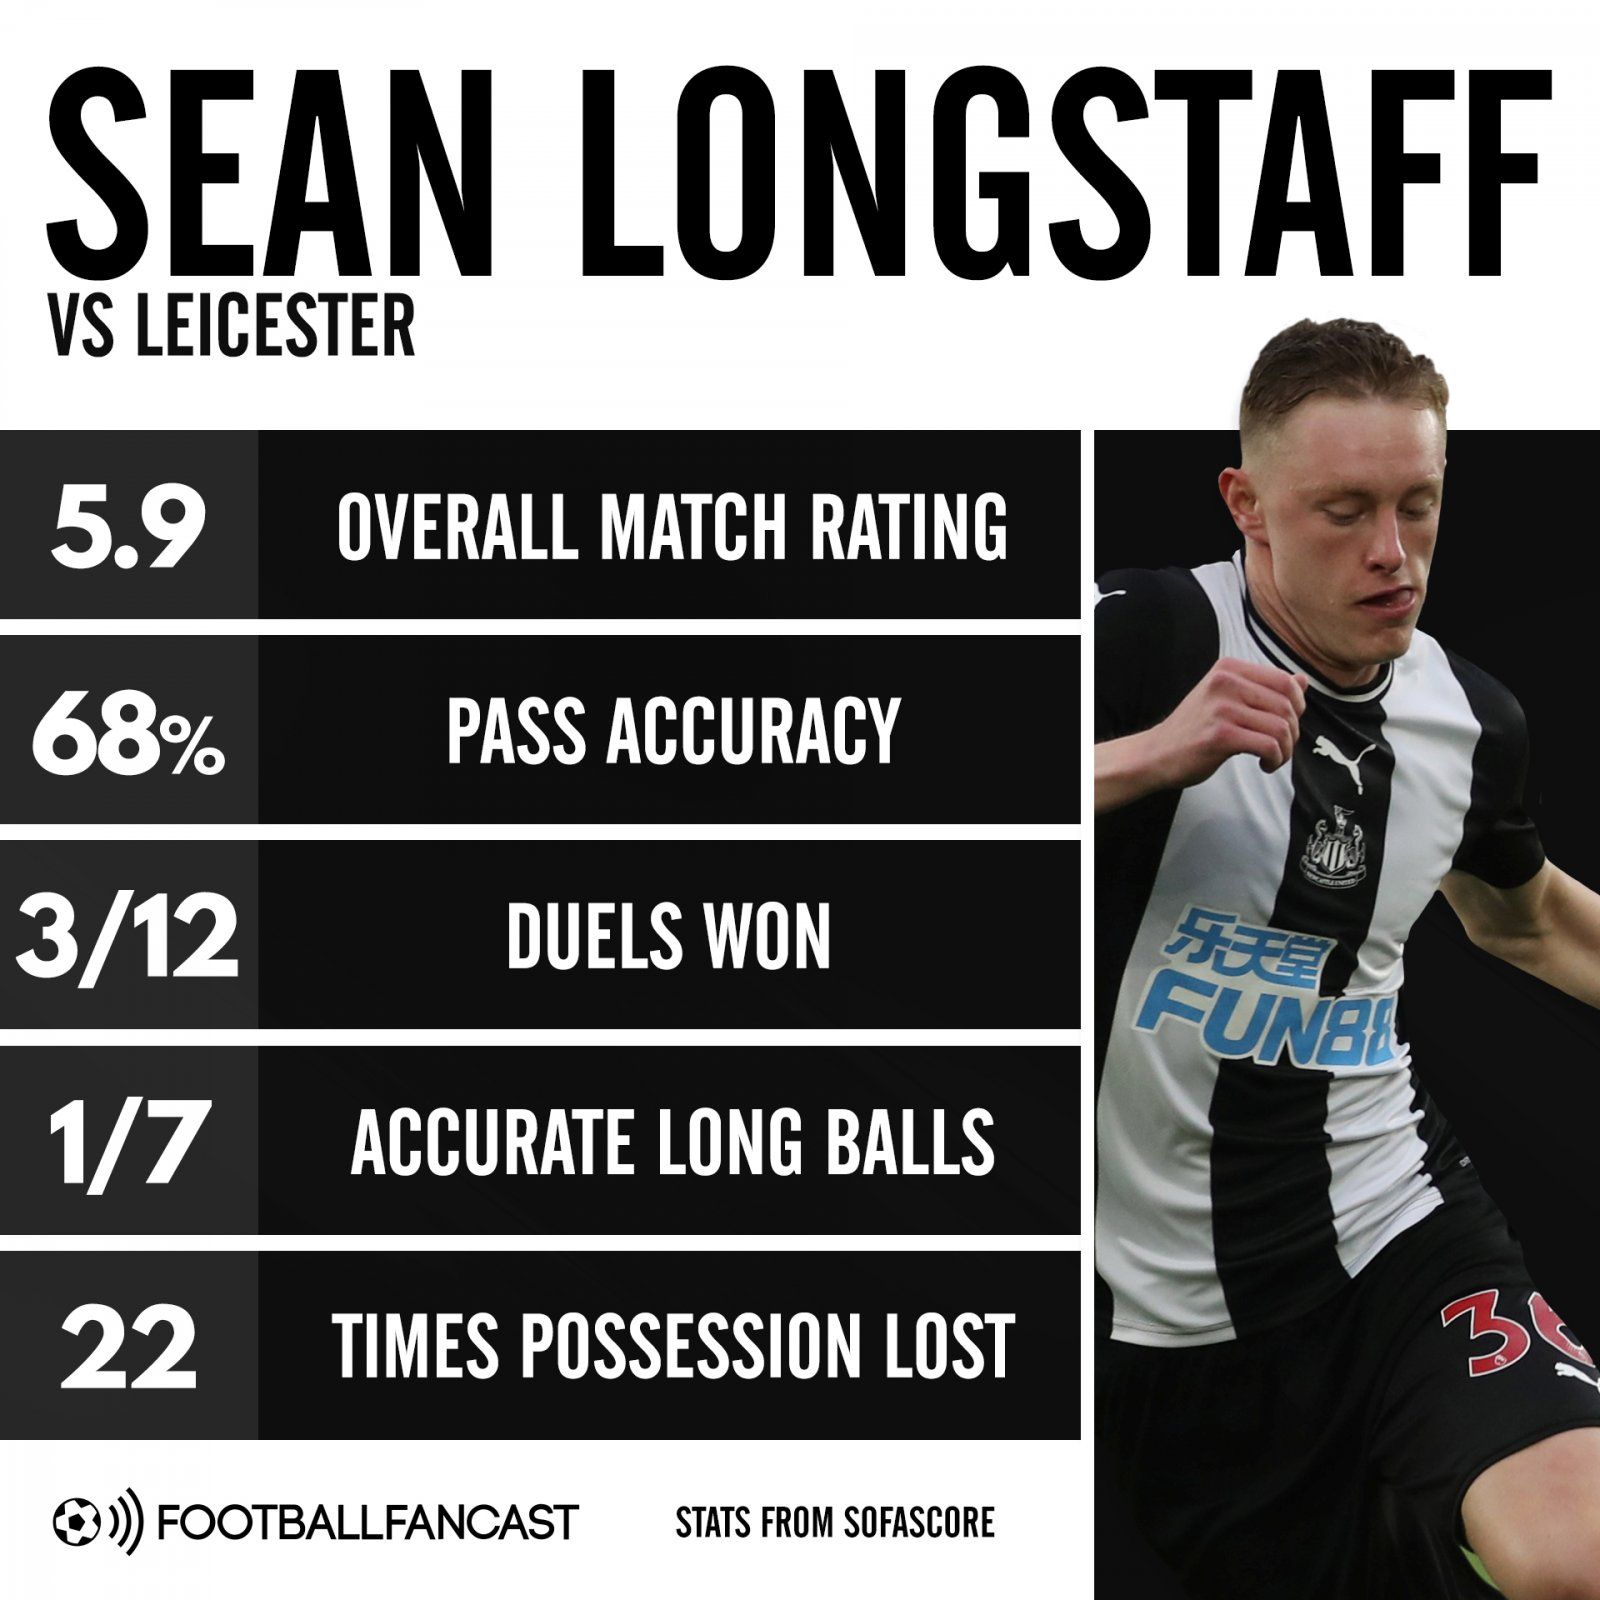 Sean Longstaff vs Leicester